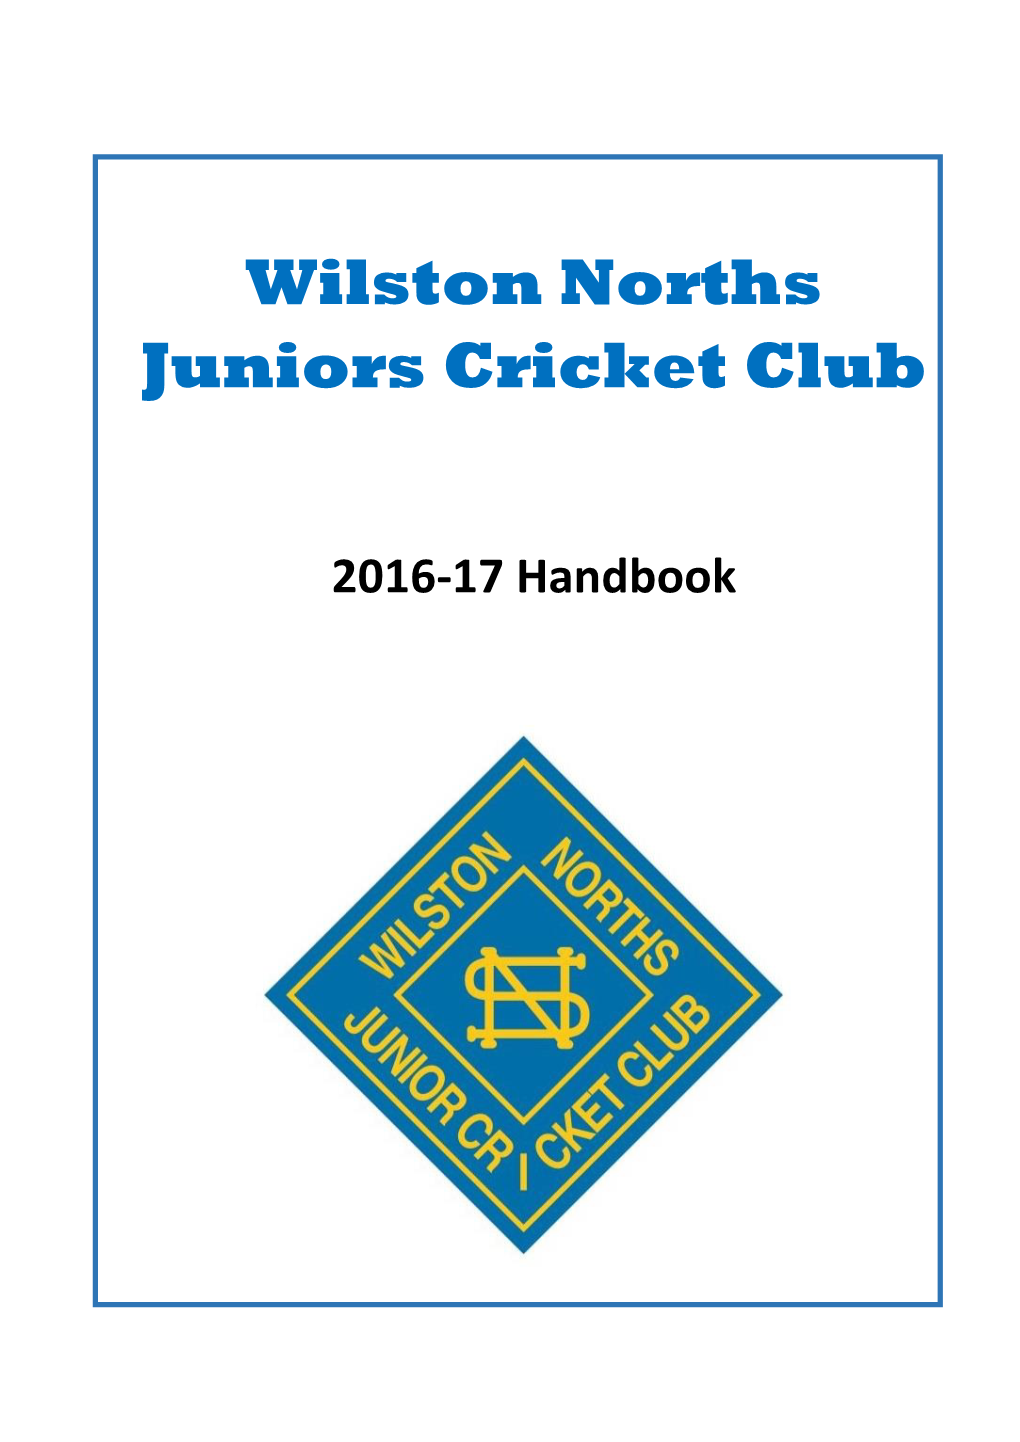 Wilston Norths Juniors Cricket Club